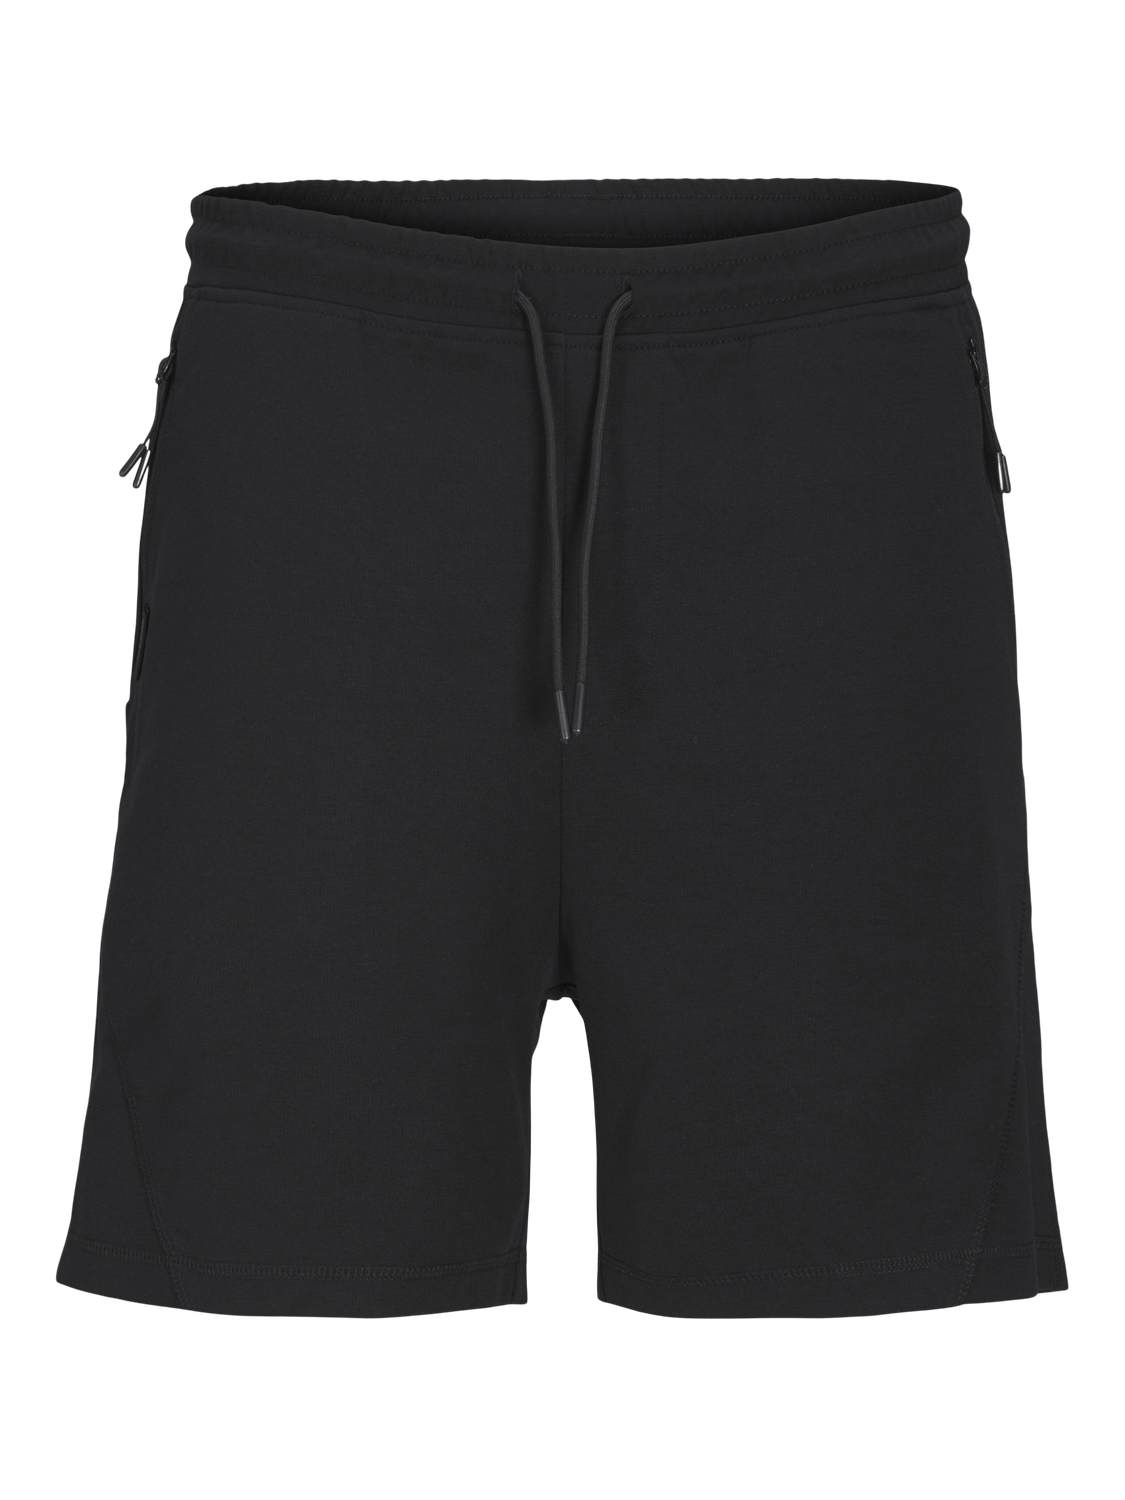 Jack & Jones Plus Size Tight Fit Sweatstof shorts -Black - 12257068